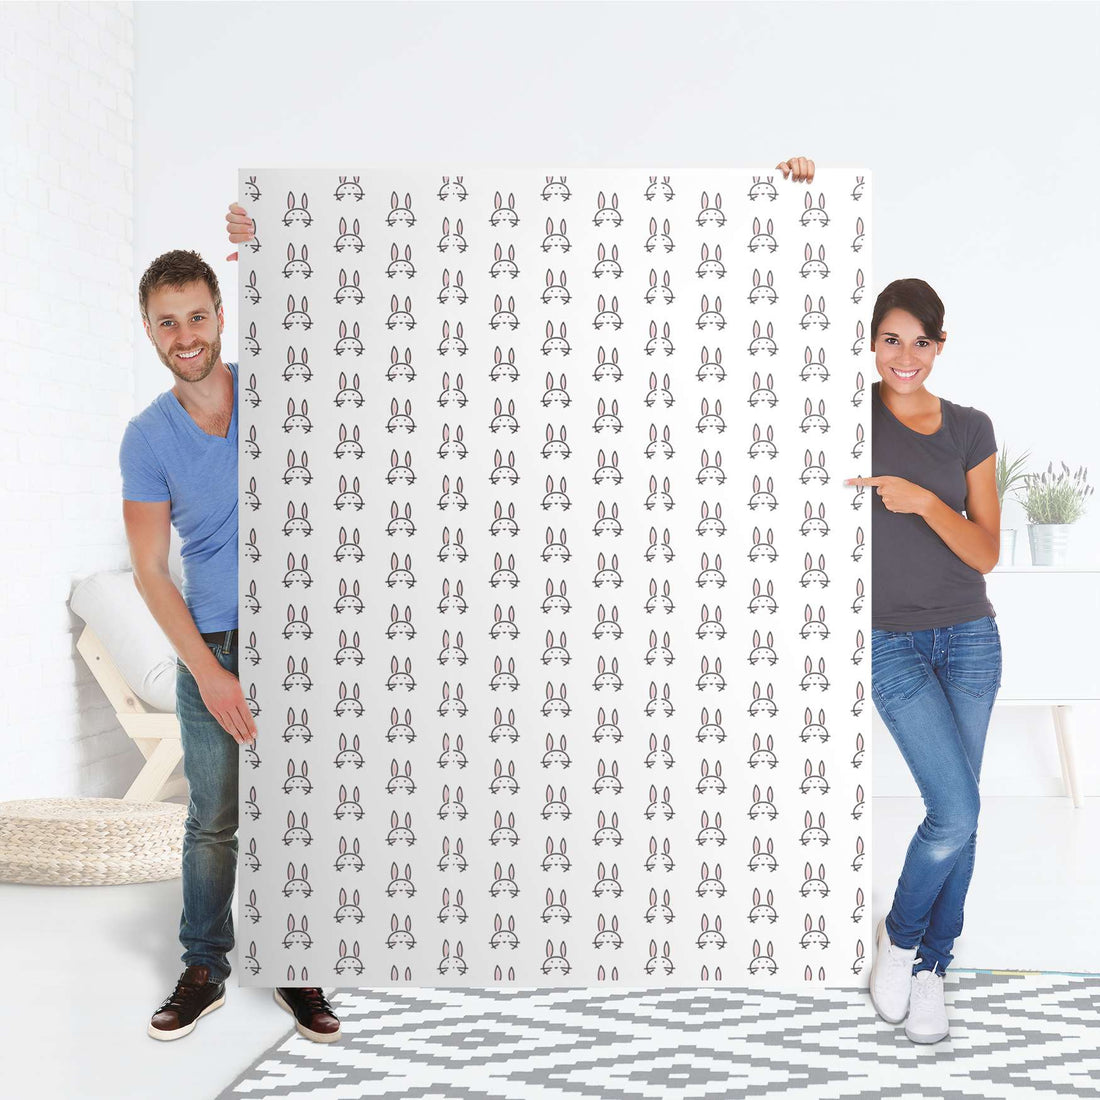 Folie für Möbel Hoppel - IKEA Pax Schrank 201 cm Höhe - 3 Türen - Folie